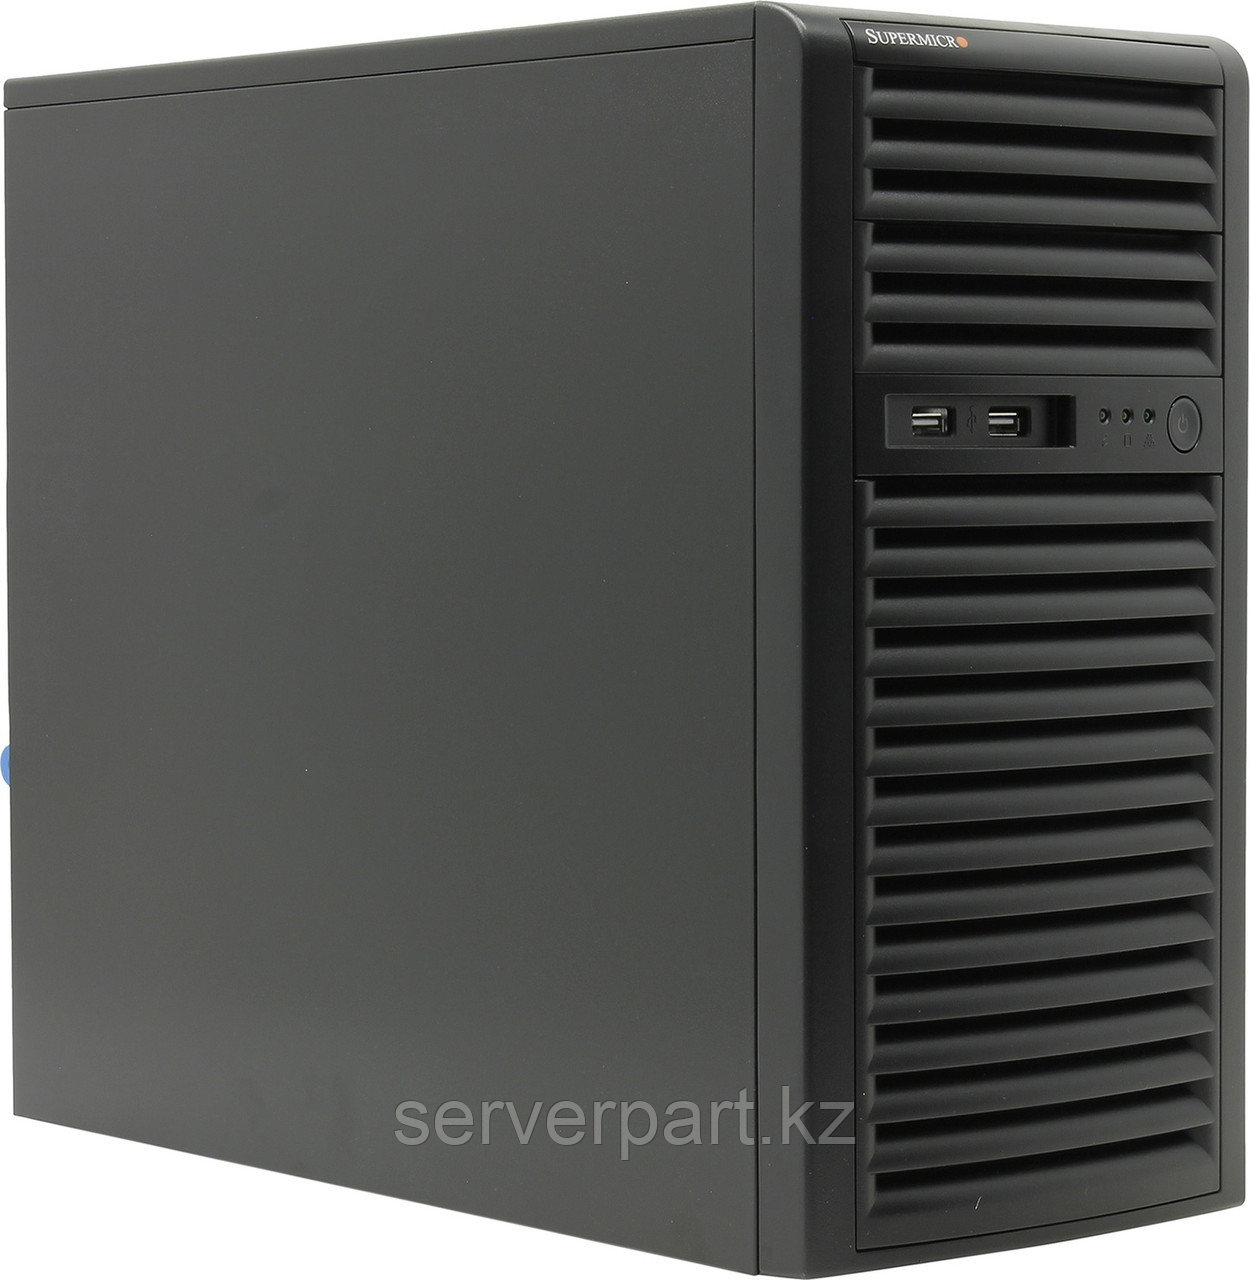 Сервер Supermicro SYS-5039D Tower/4-core intel xeon E3-1220v6 3GHz/16GB EUDIMM/1x480GB SSD RI Hyb